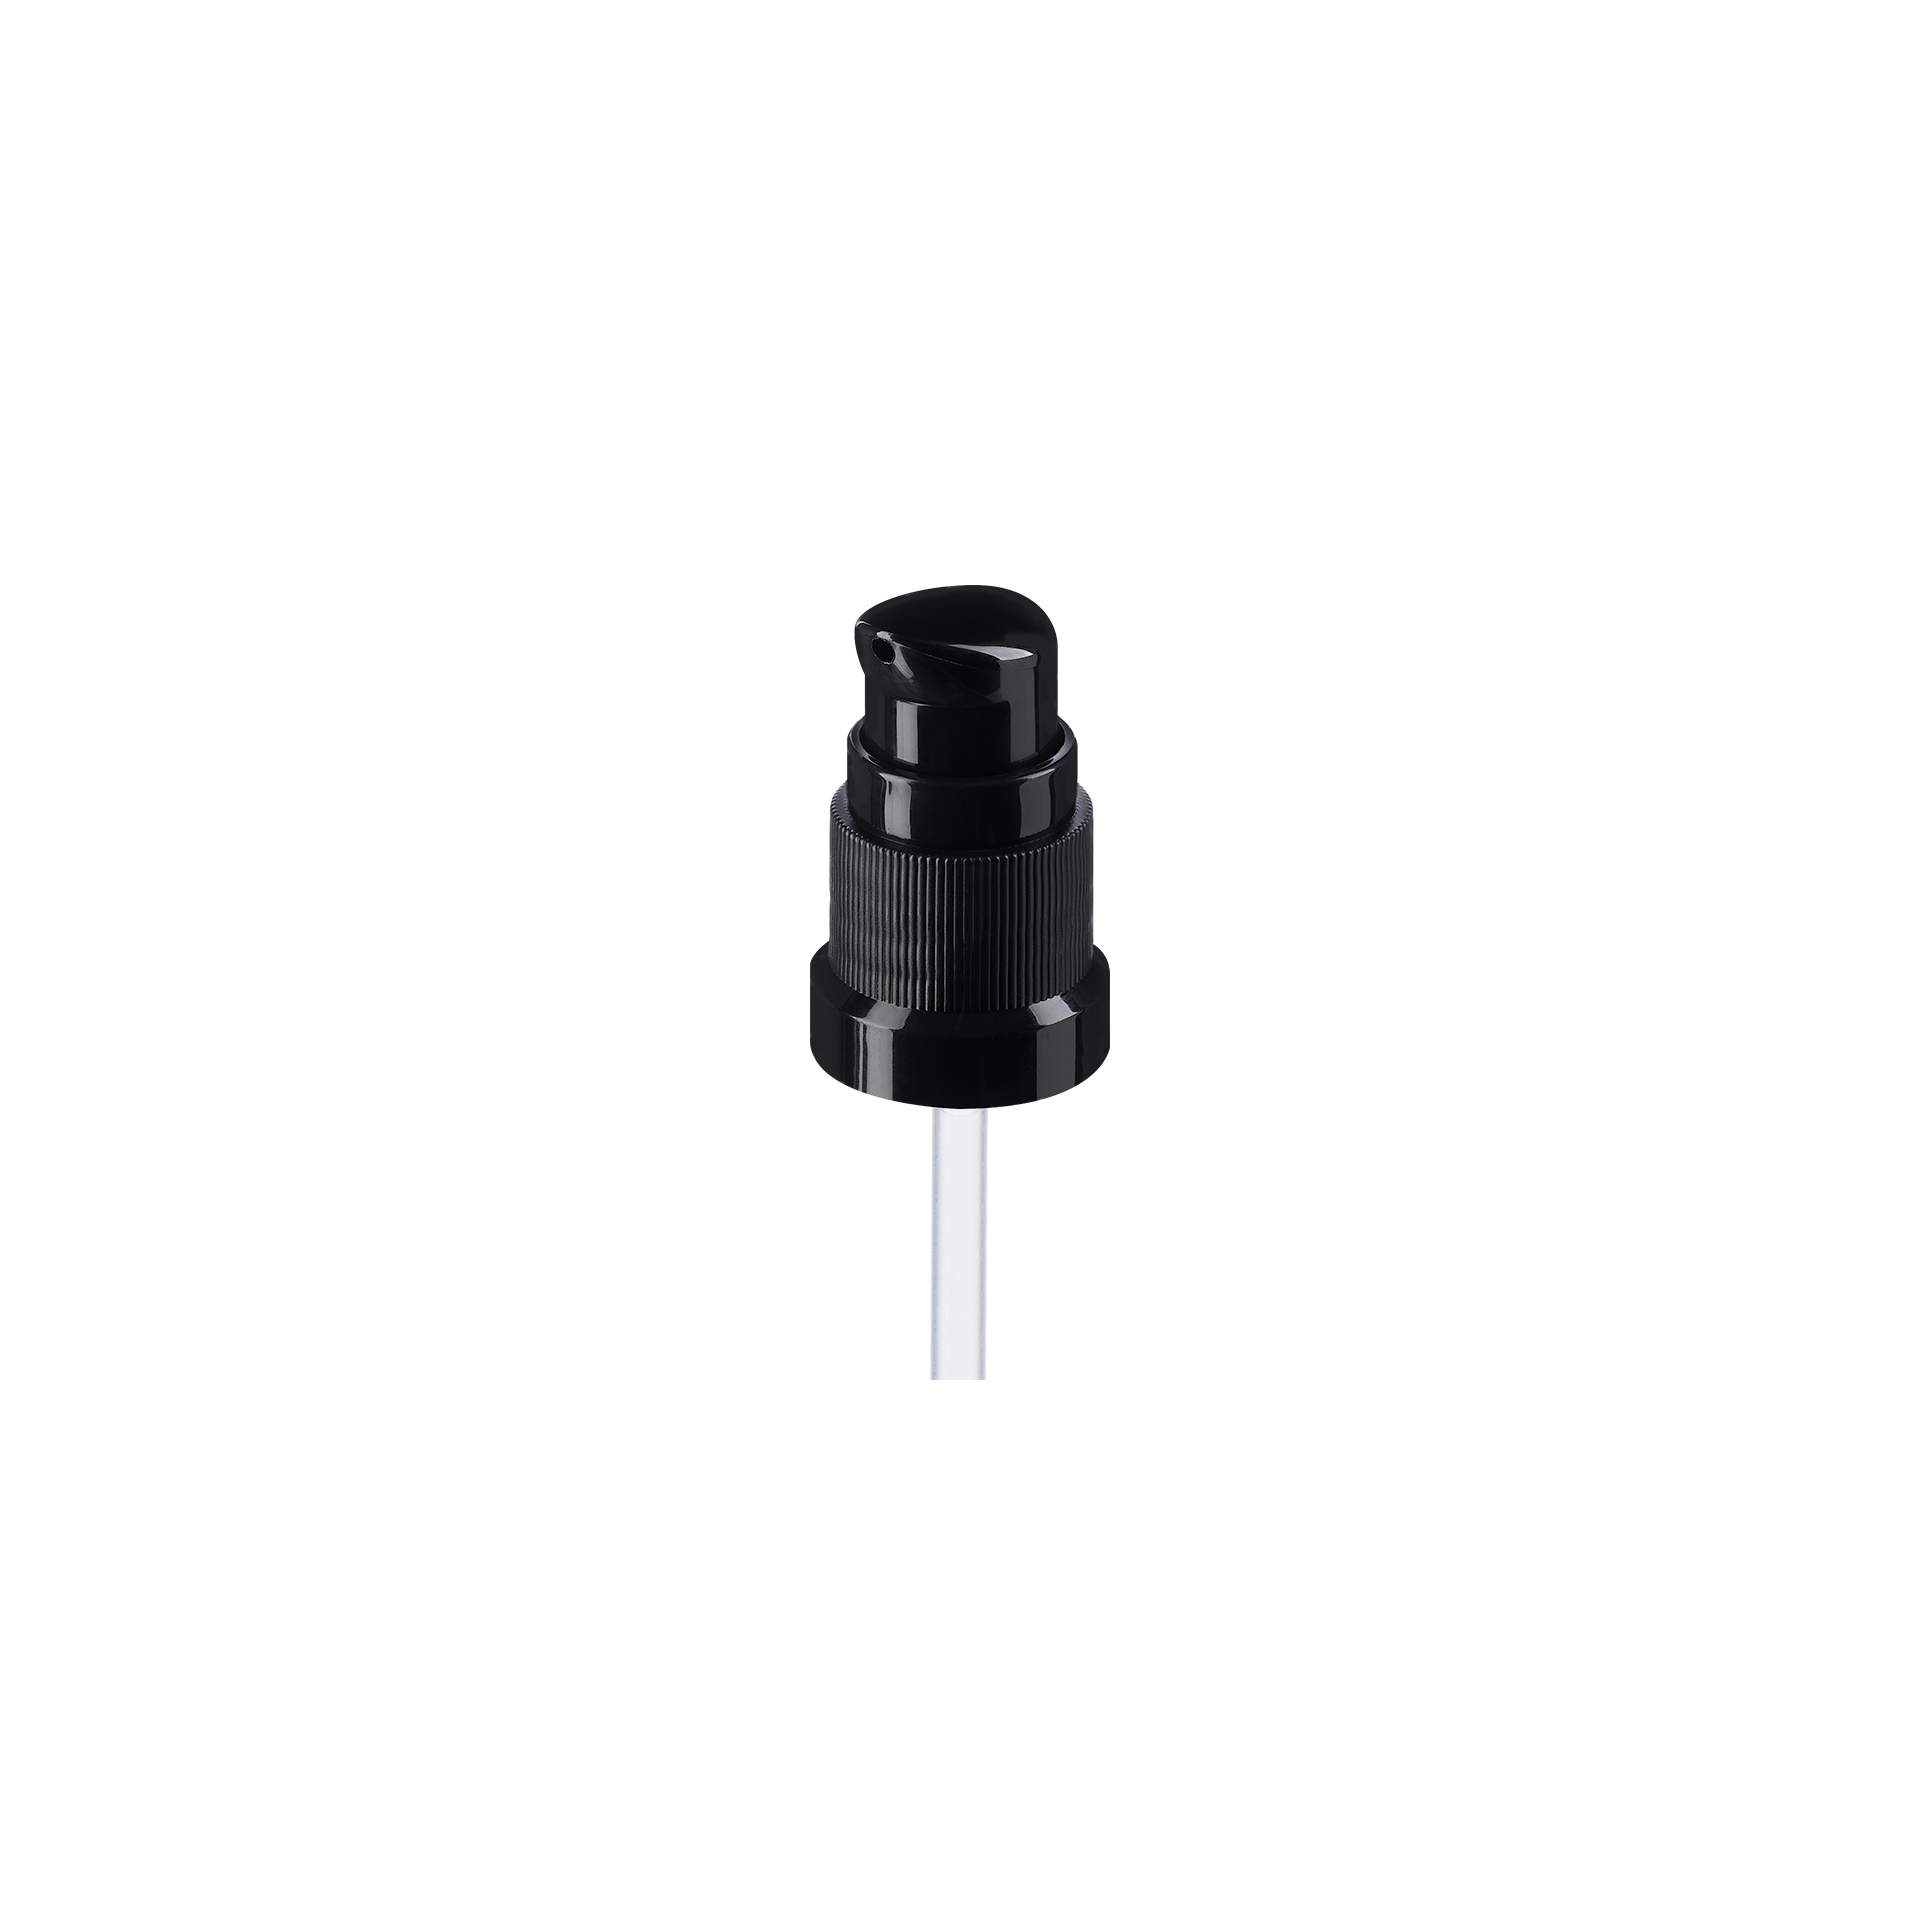 Lotion pump Metropolitan DIN18, PP, black, dose 0.15ml, black security clip (Ginger 15)